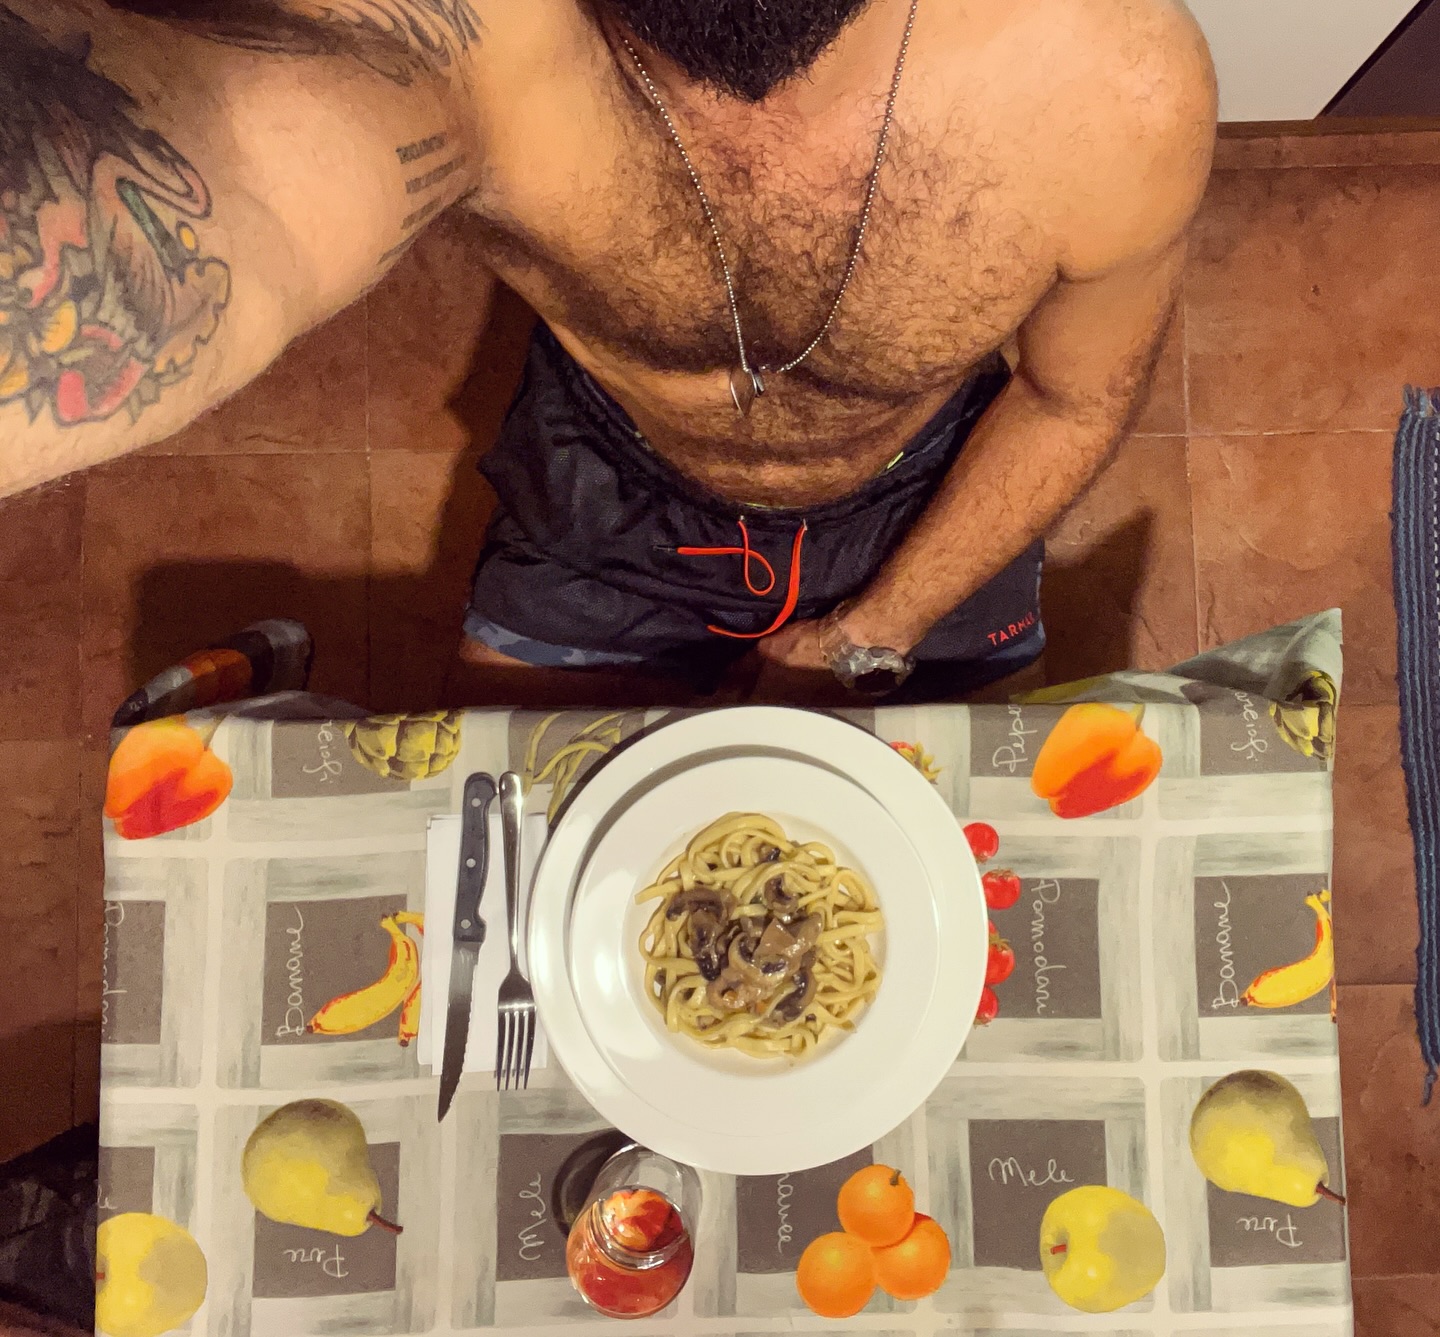 🐻🍽 Dinner time 😻🍴Spaghetti con i funghi 🍝 #me #spaghetti #mushrooms #foodlovers #amazingfood #tattoo #tasty #foodpictures  #delicious #foodgasm  #hairyhunk #cool #gains #protein  #muscle #hairygay #hairylegs #instabear #gaystagram #sexyundie #briefs #beardlove #gaylike #woof #bearsofinstagram